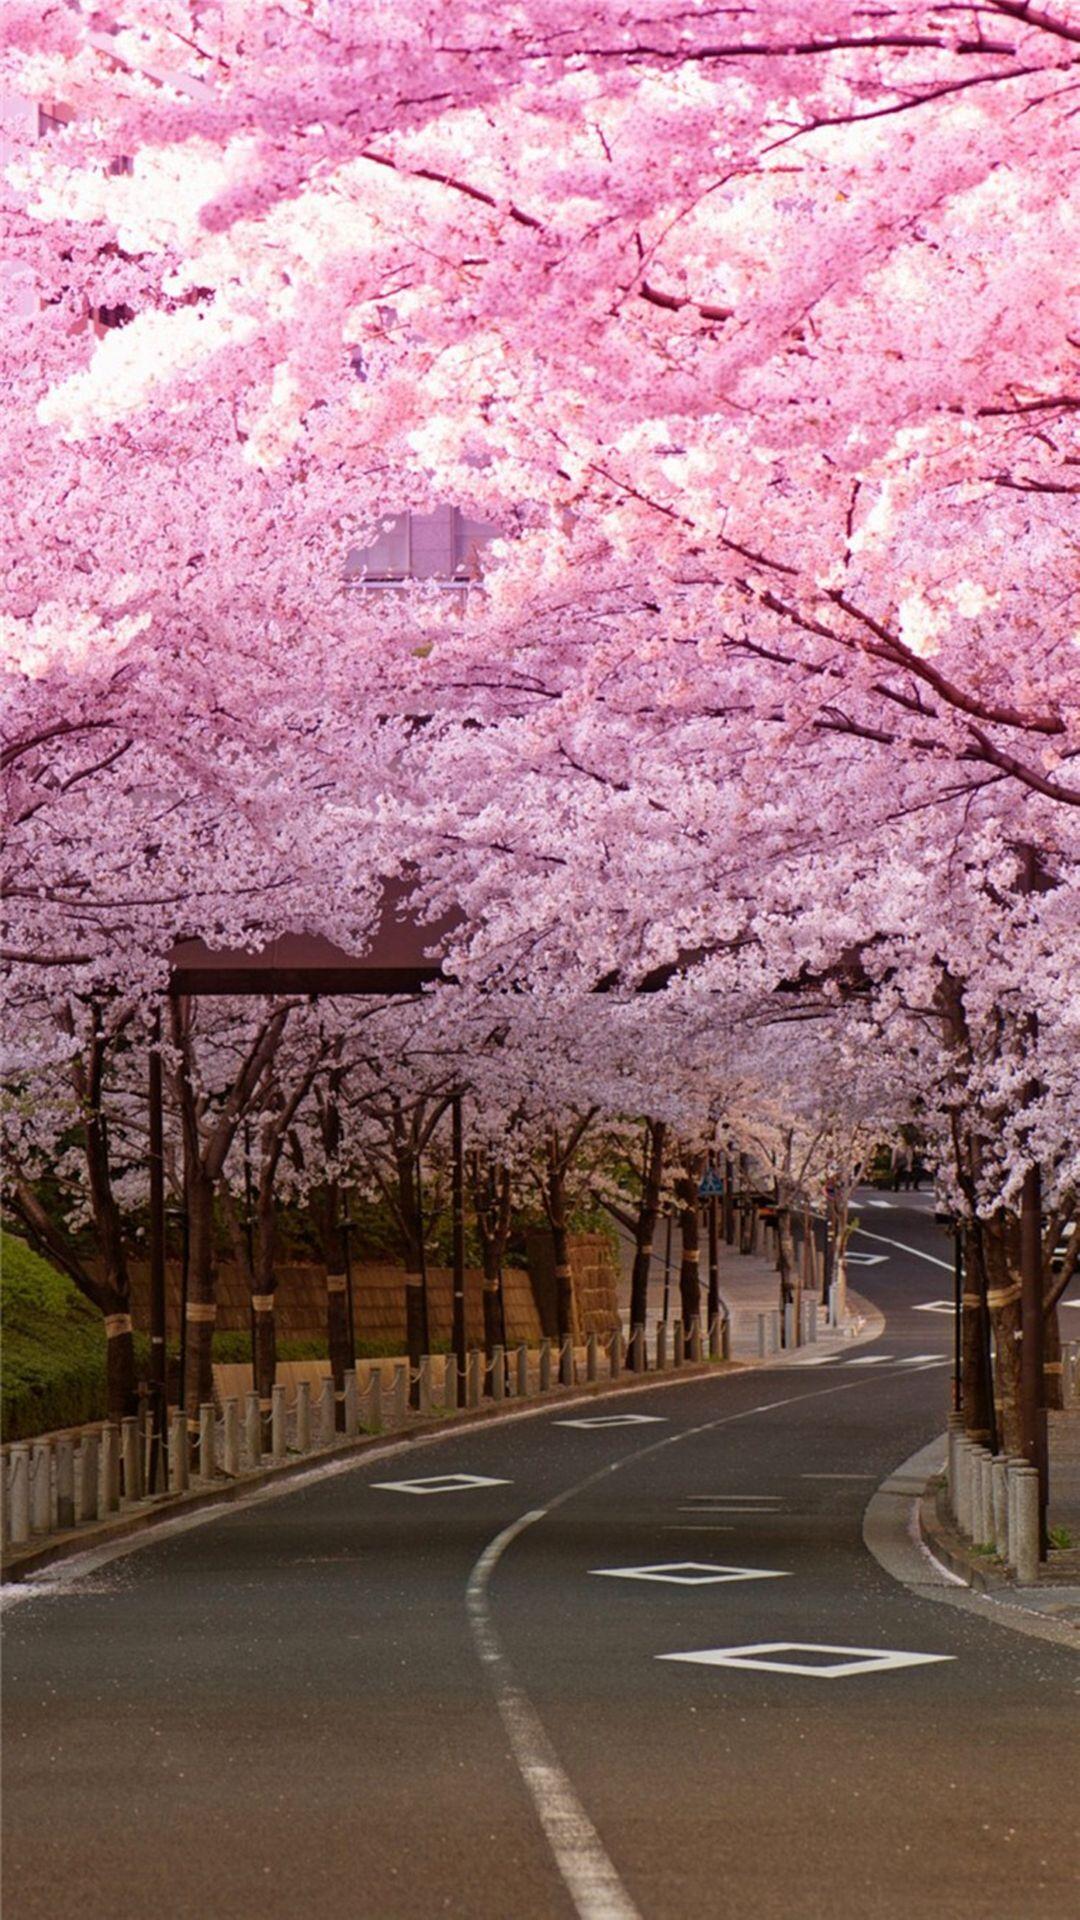 Japanese Cherry Blossom iPhone Wallpaper Free Japanese